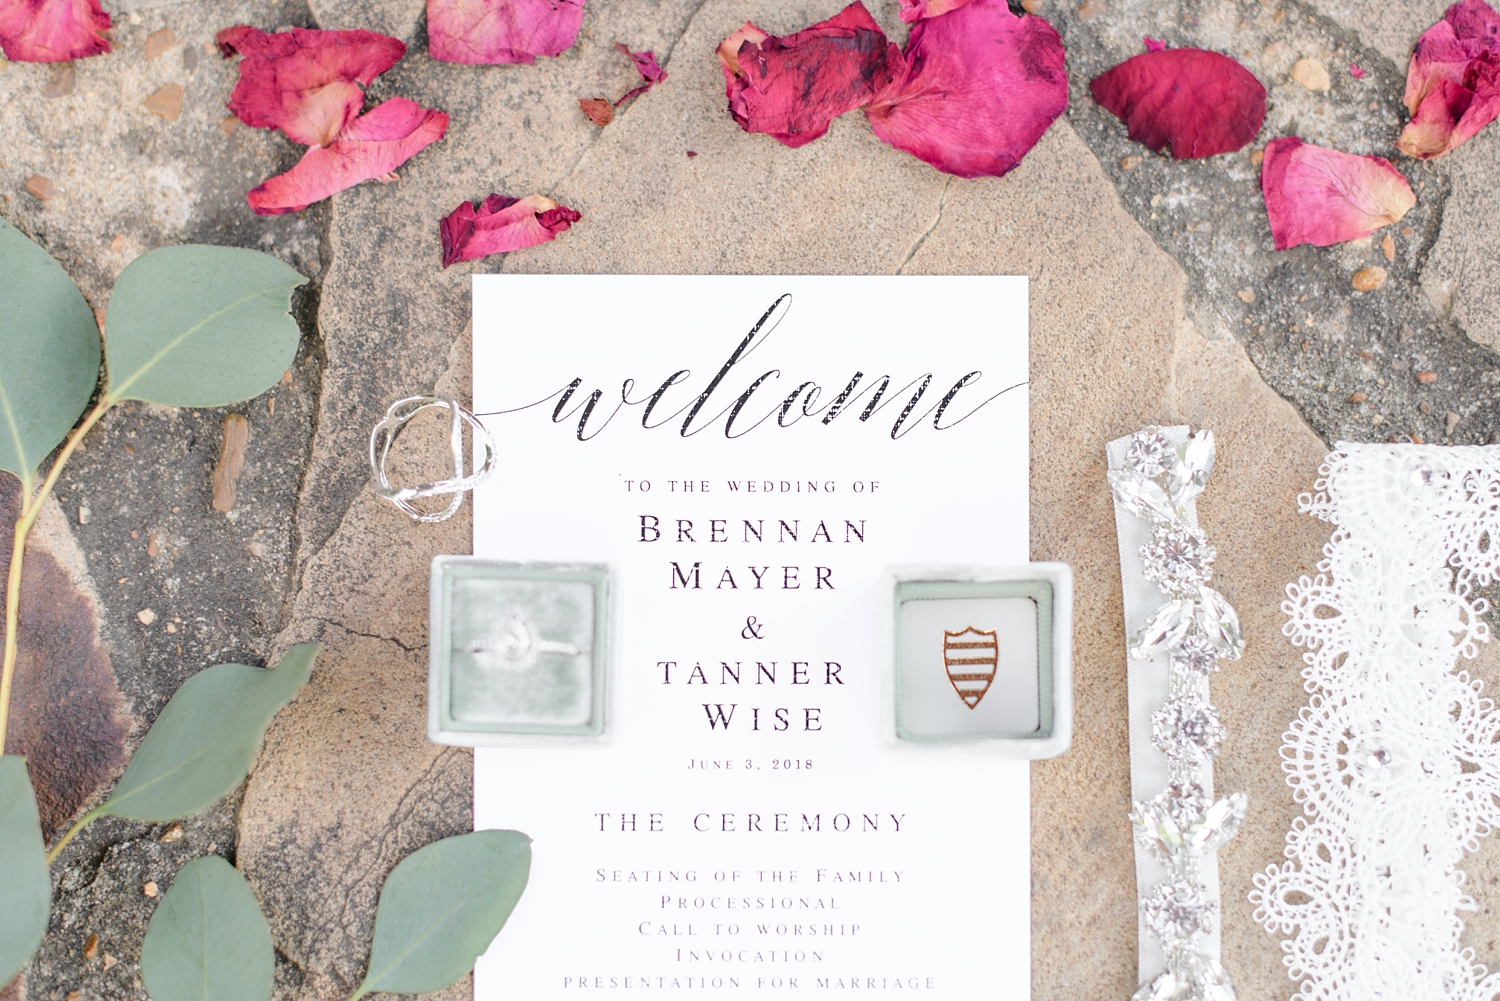 Brennan-Tanner-Wise-Wedding-6526_Blog.jpg